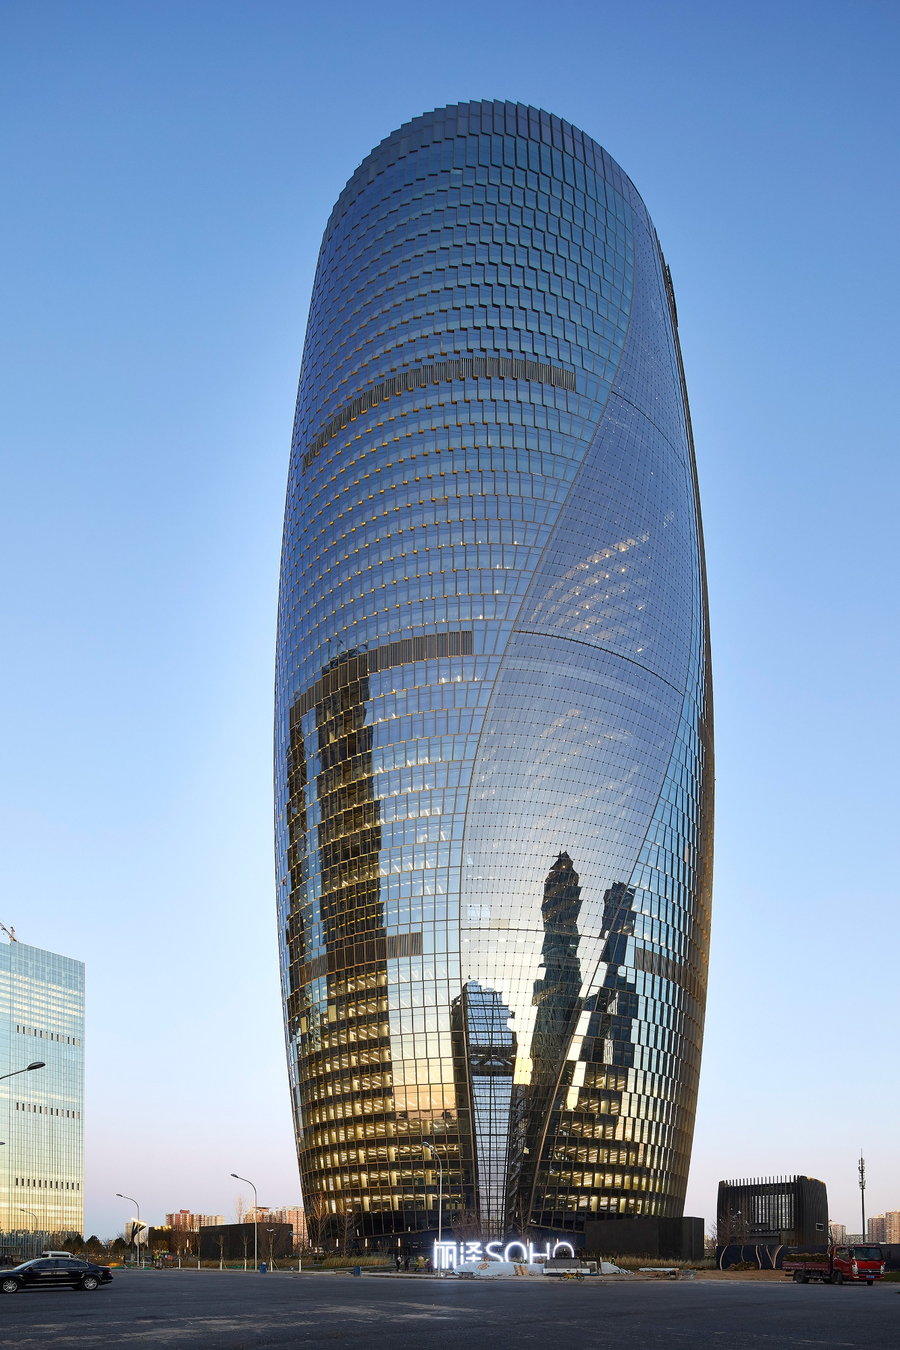 Exterior shot of the spiraling Leeza SOHO Tower, designed by Zaha Hadid Architects.